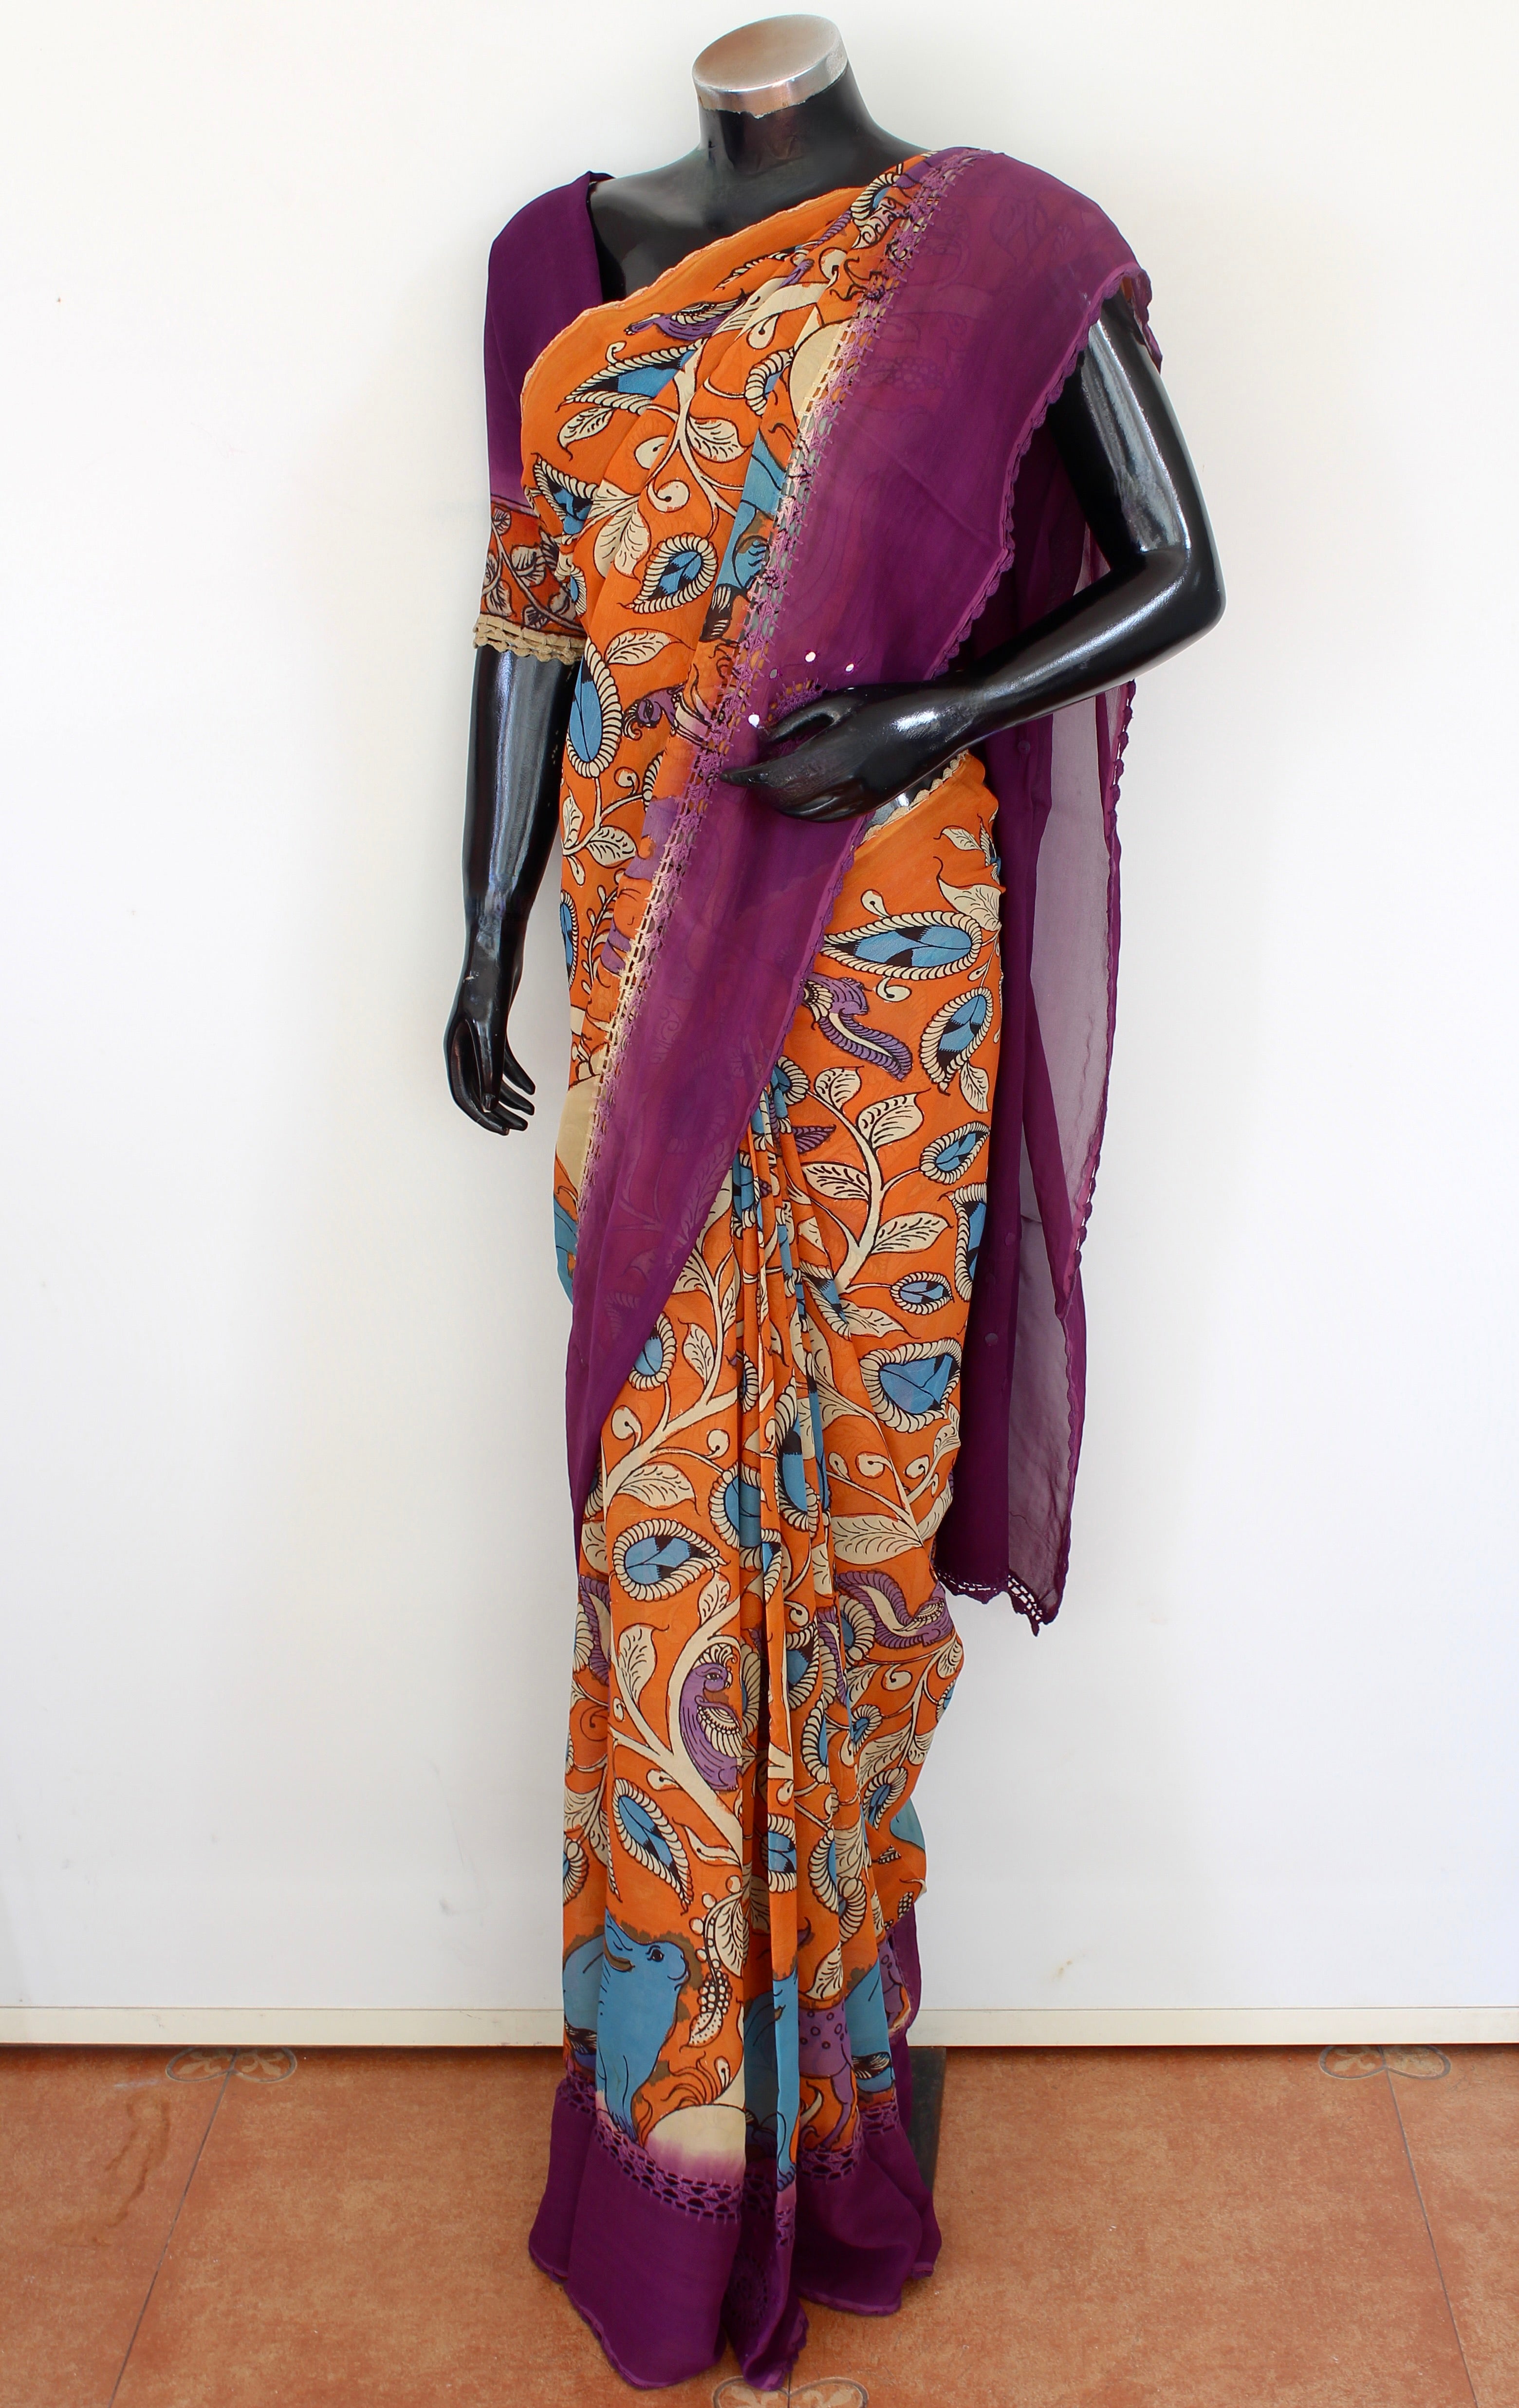 Georgette sari with crochet work